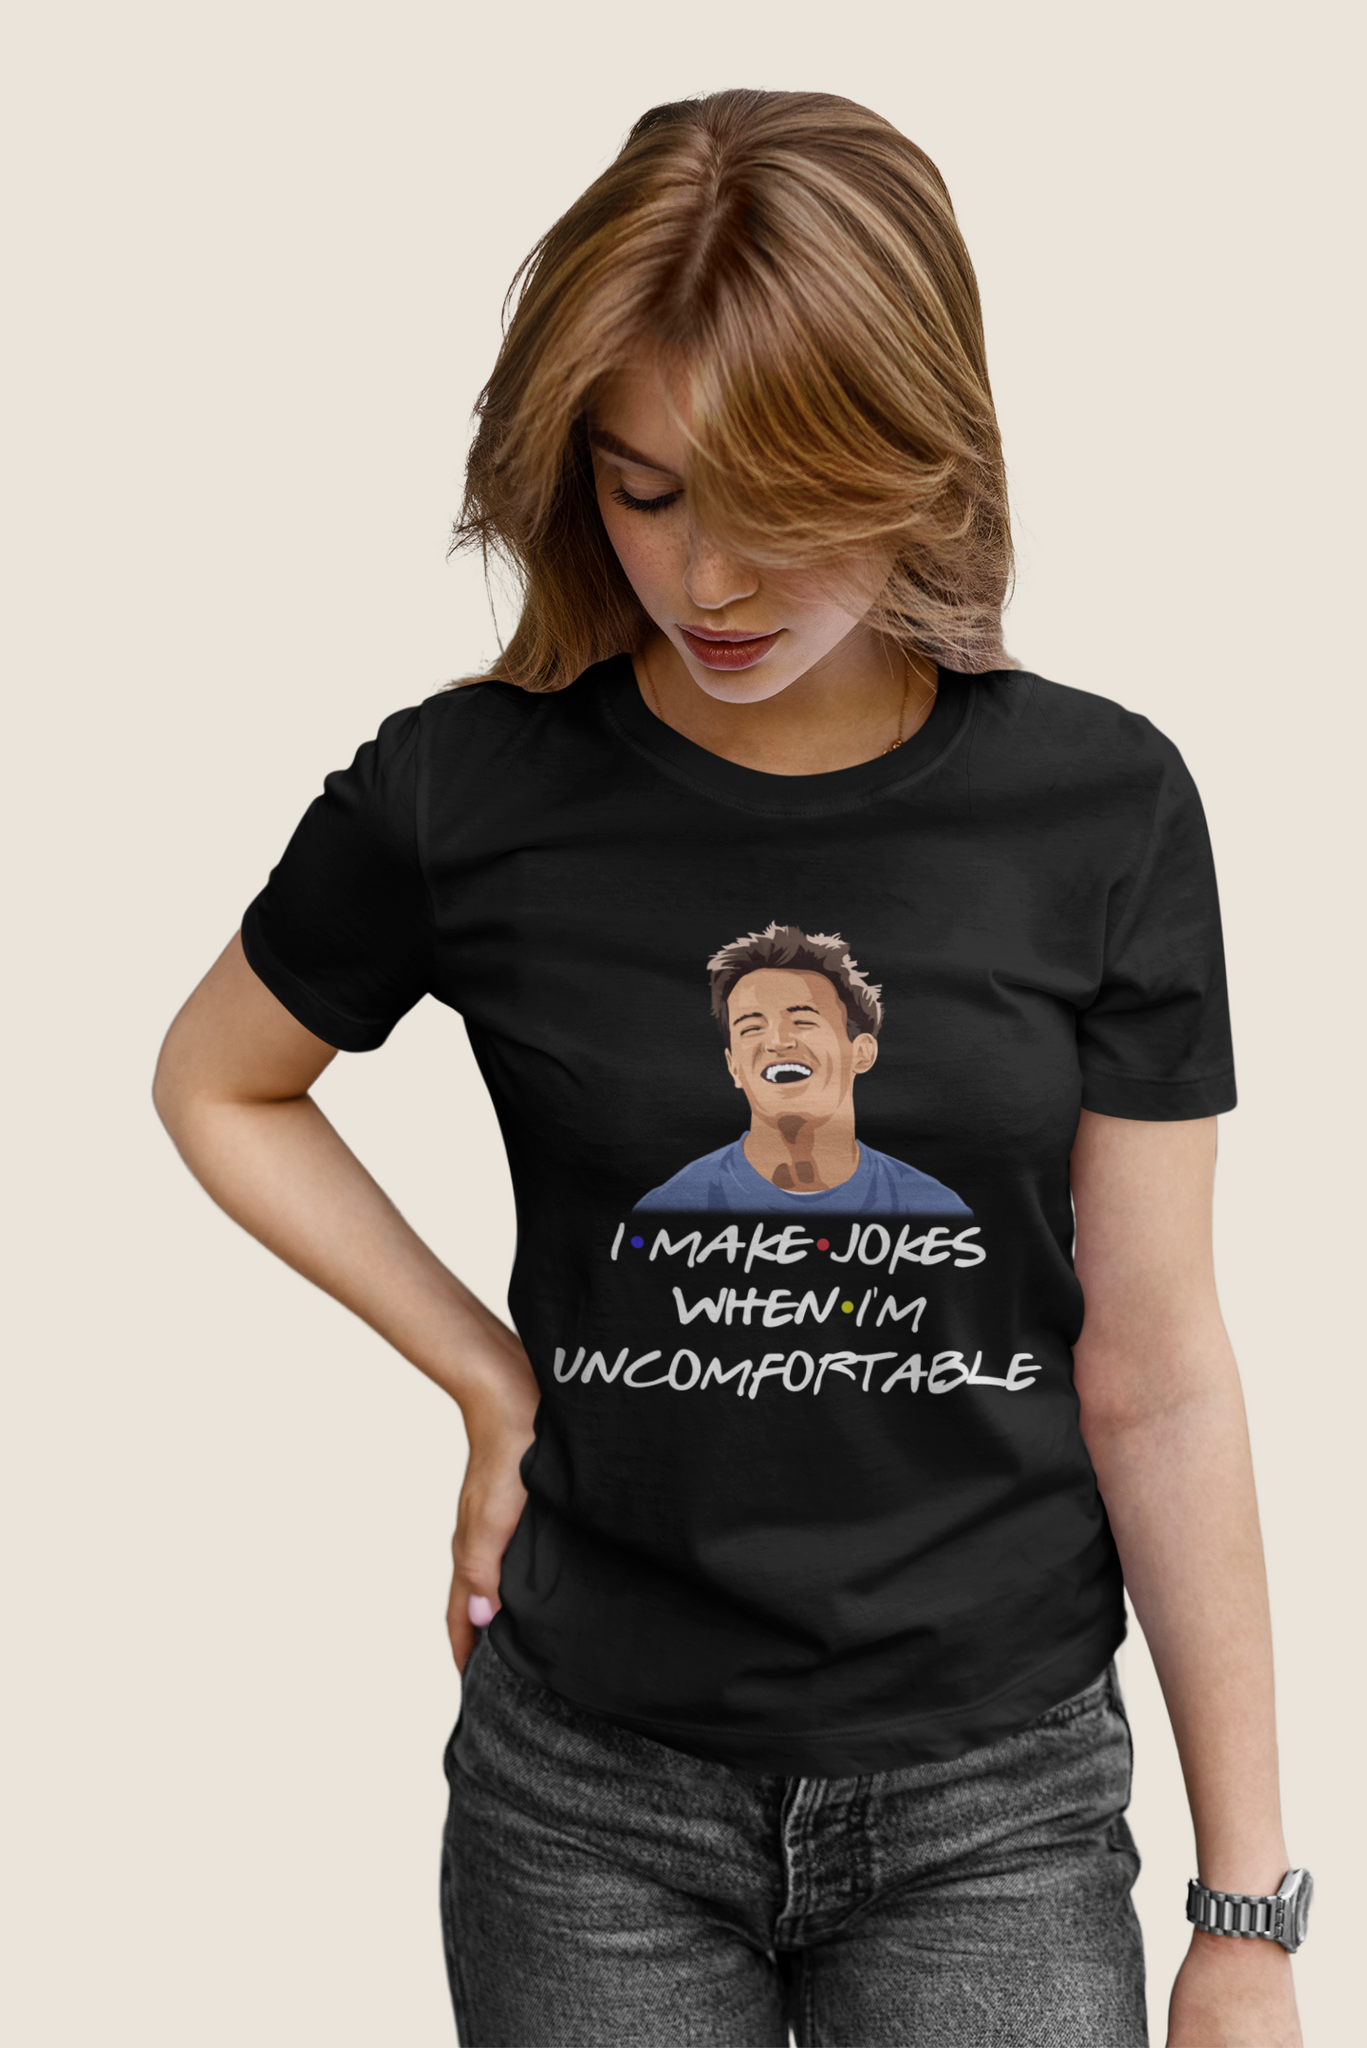 Friends TV Show T Shirt, Chandler T Shirt, I Make Jokes When Im Uncomfortable Tshirt